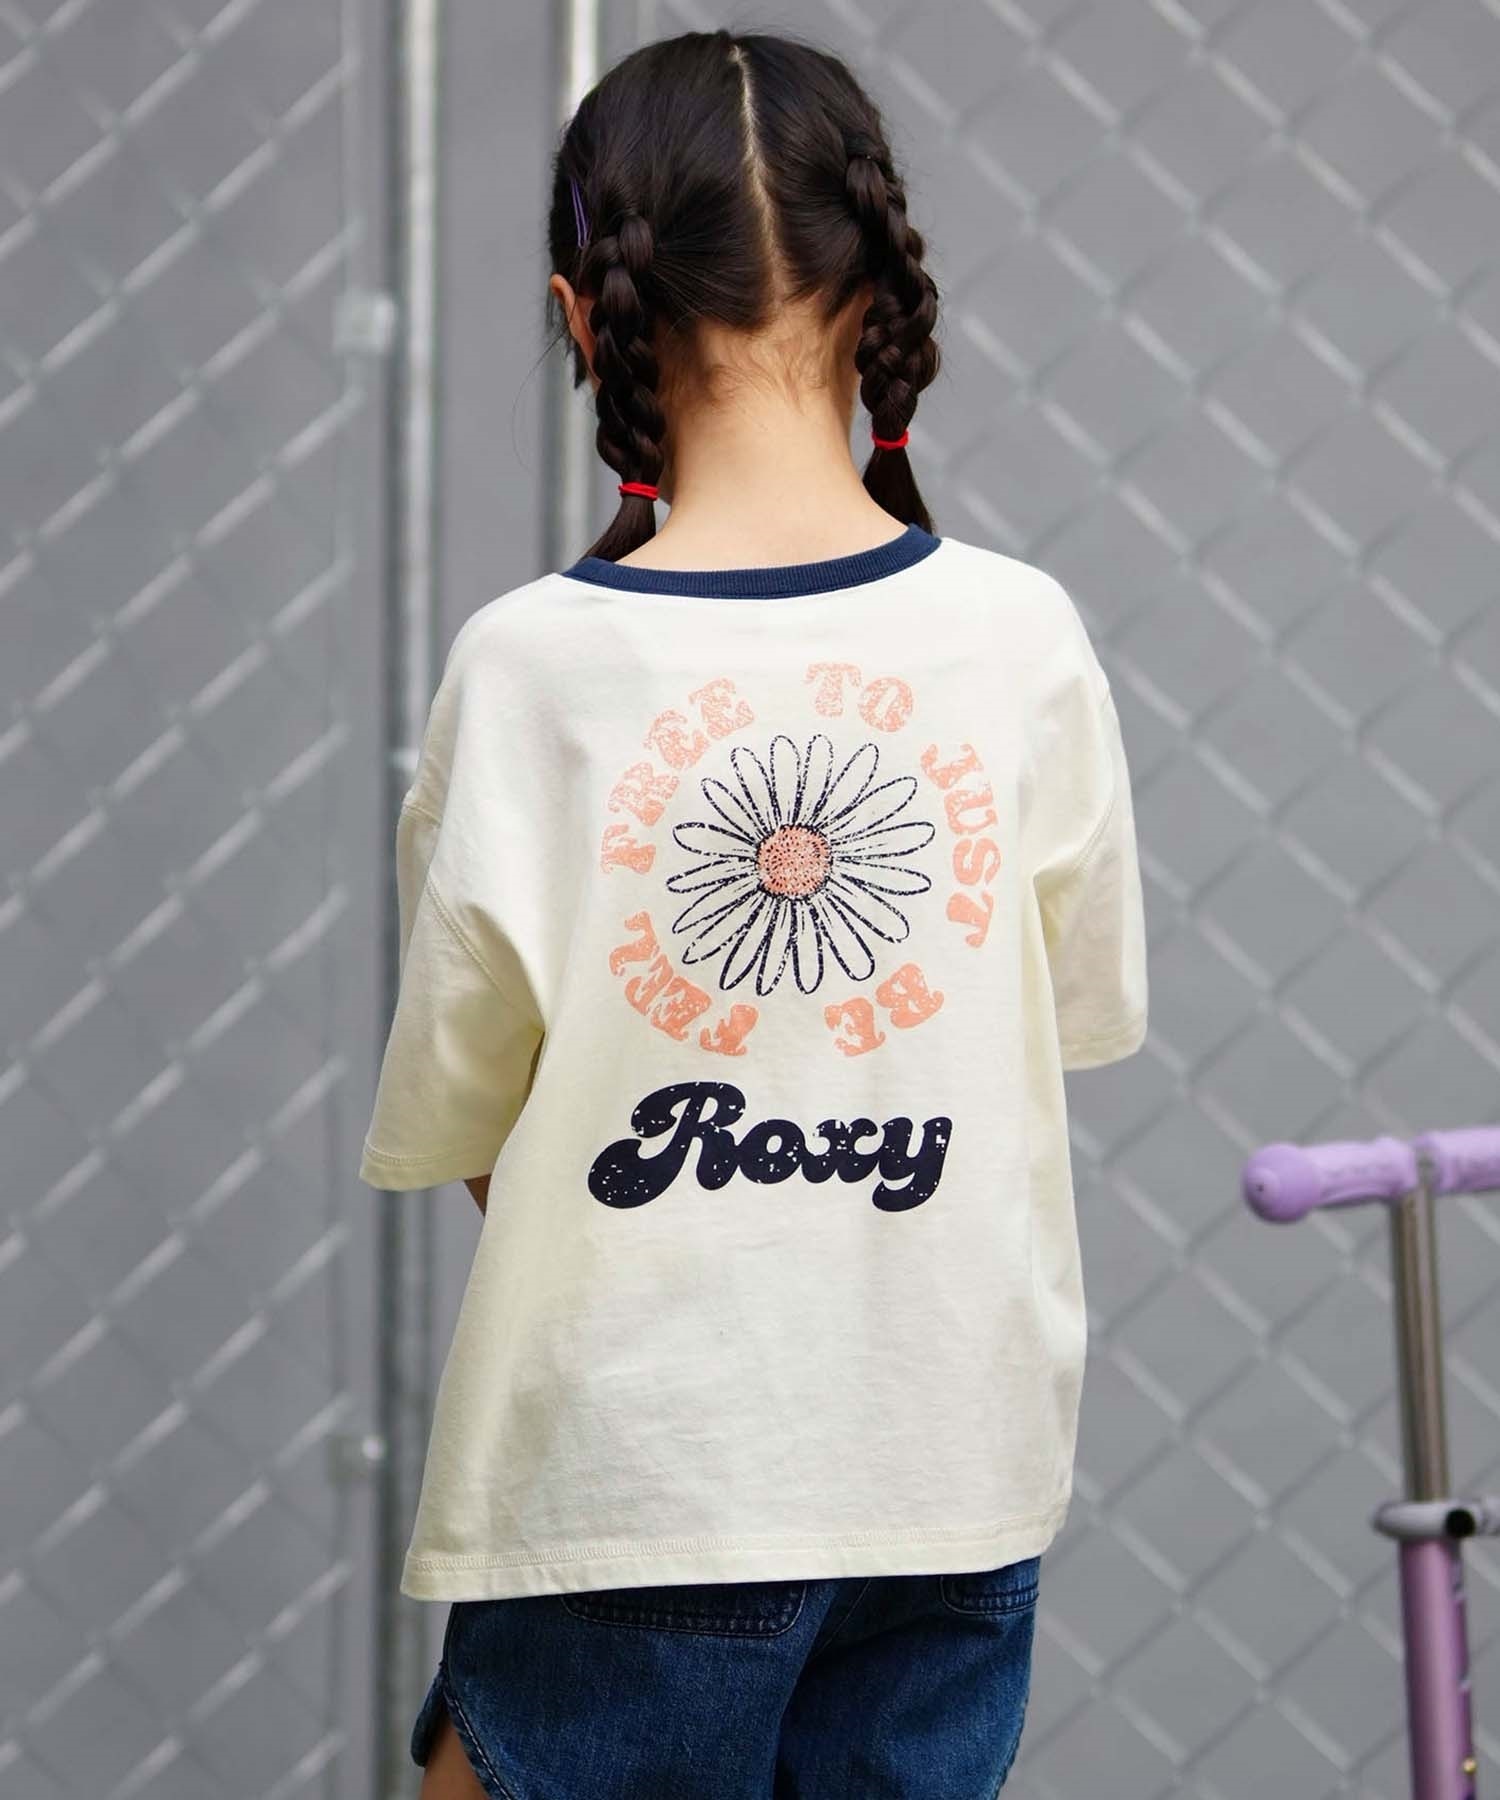 ROXY ロキシー MINI FEEL FREE ミニ フィール フリー キッズ Tシャツ 親子コーデ TST241117(BGR-130cm)